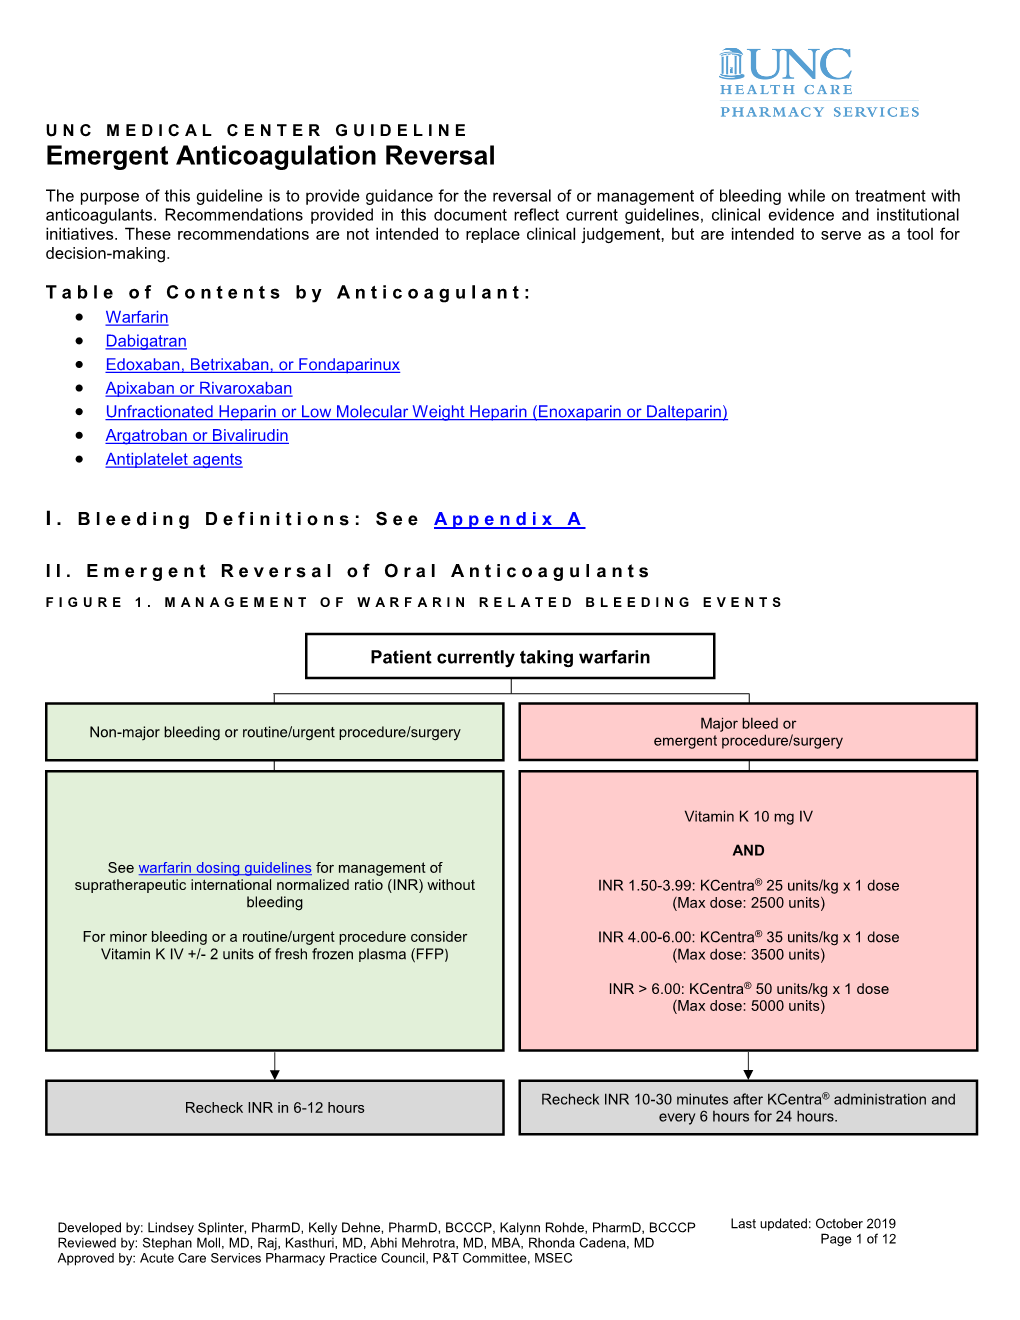 Anticoagulation Reversal Guidelines in the ED